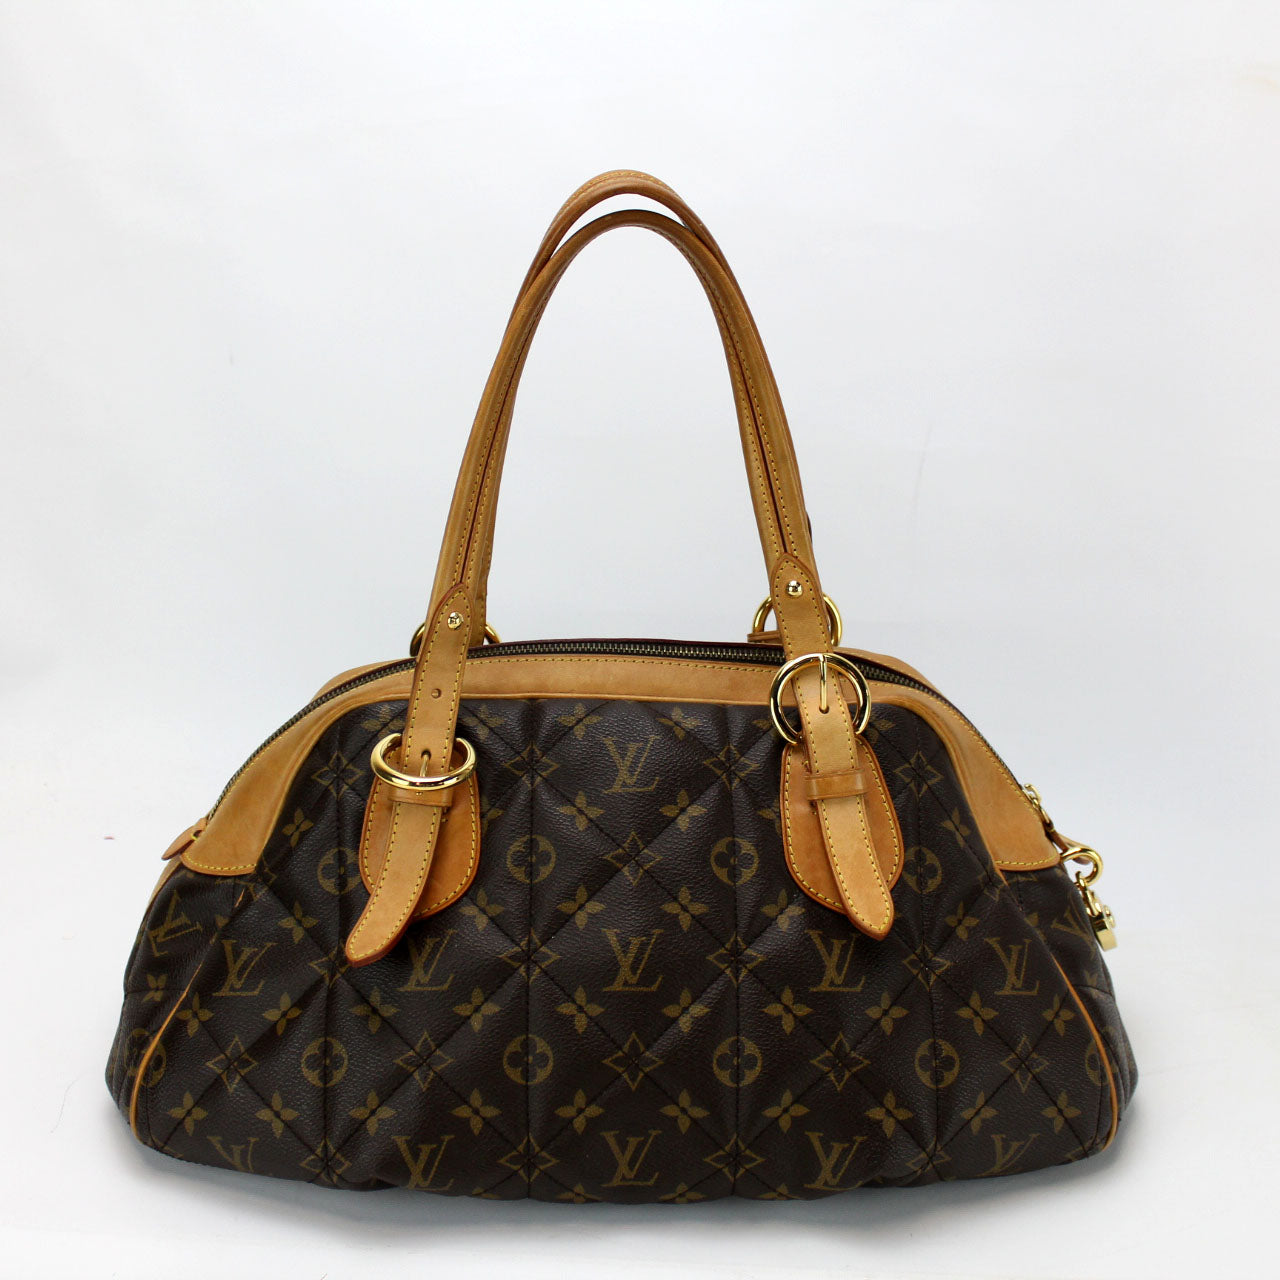 Louis Vuitton Etoile Top Handle Shopper Bag (Previously Owned